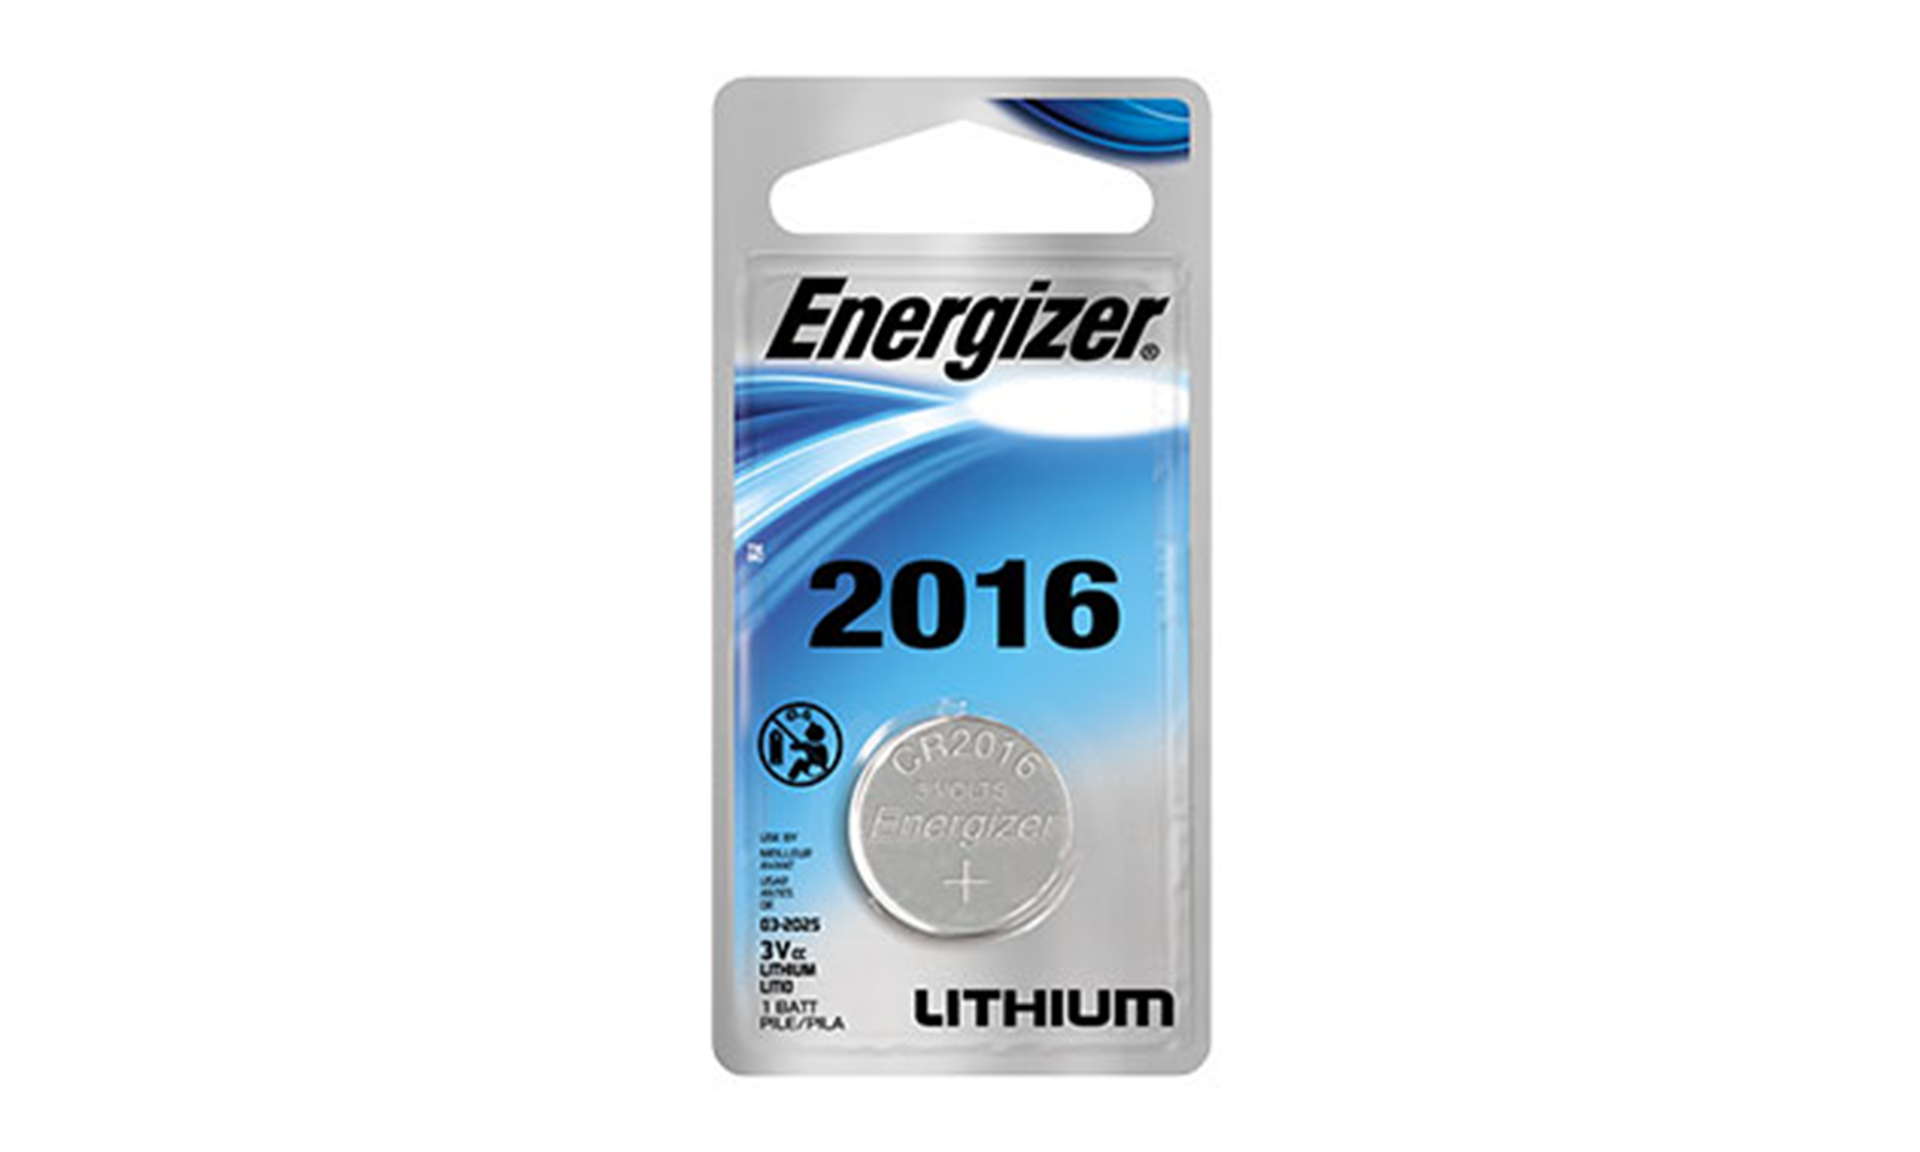 Energizer ECR2016 Battery 3V Lithium Coin Cell (1PC Blister Pack) (Child Resistant Packaging)